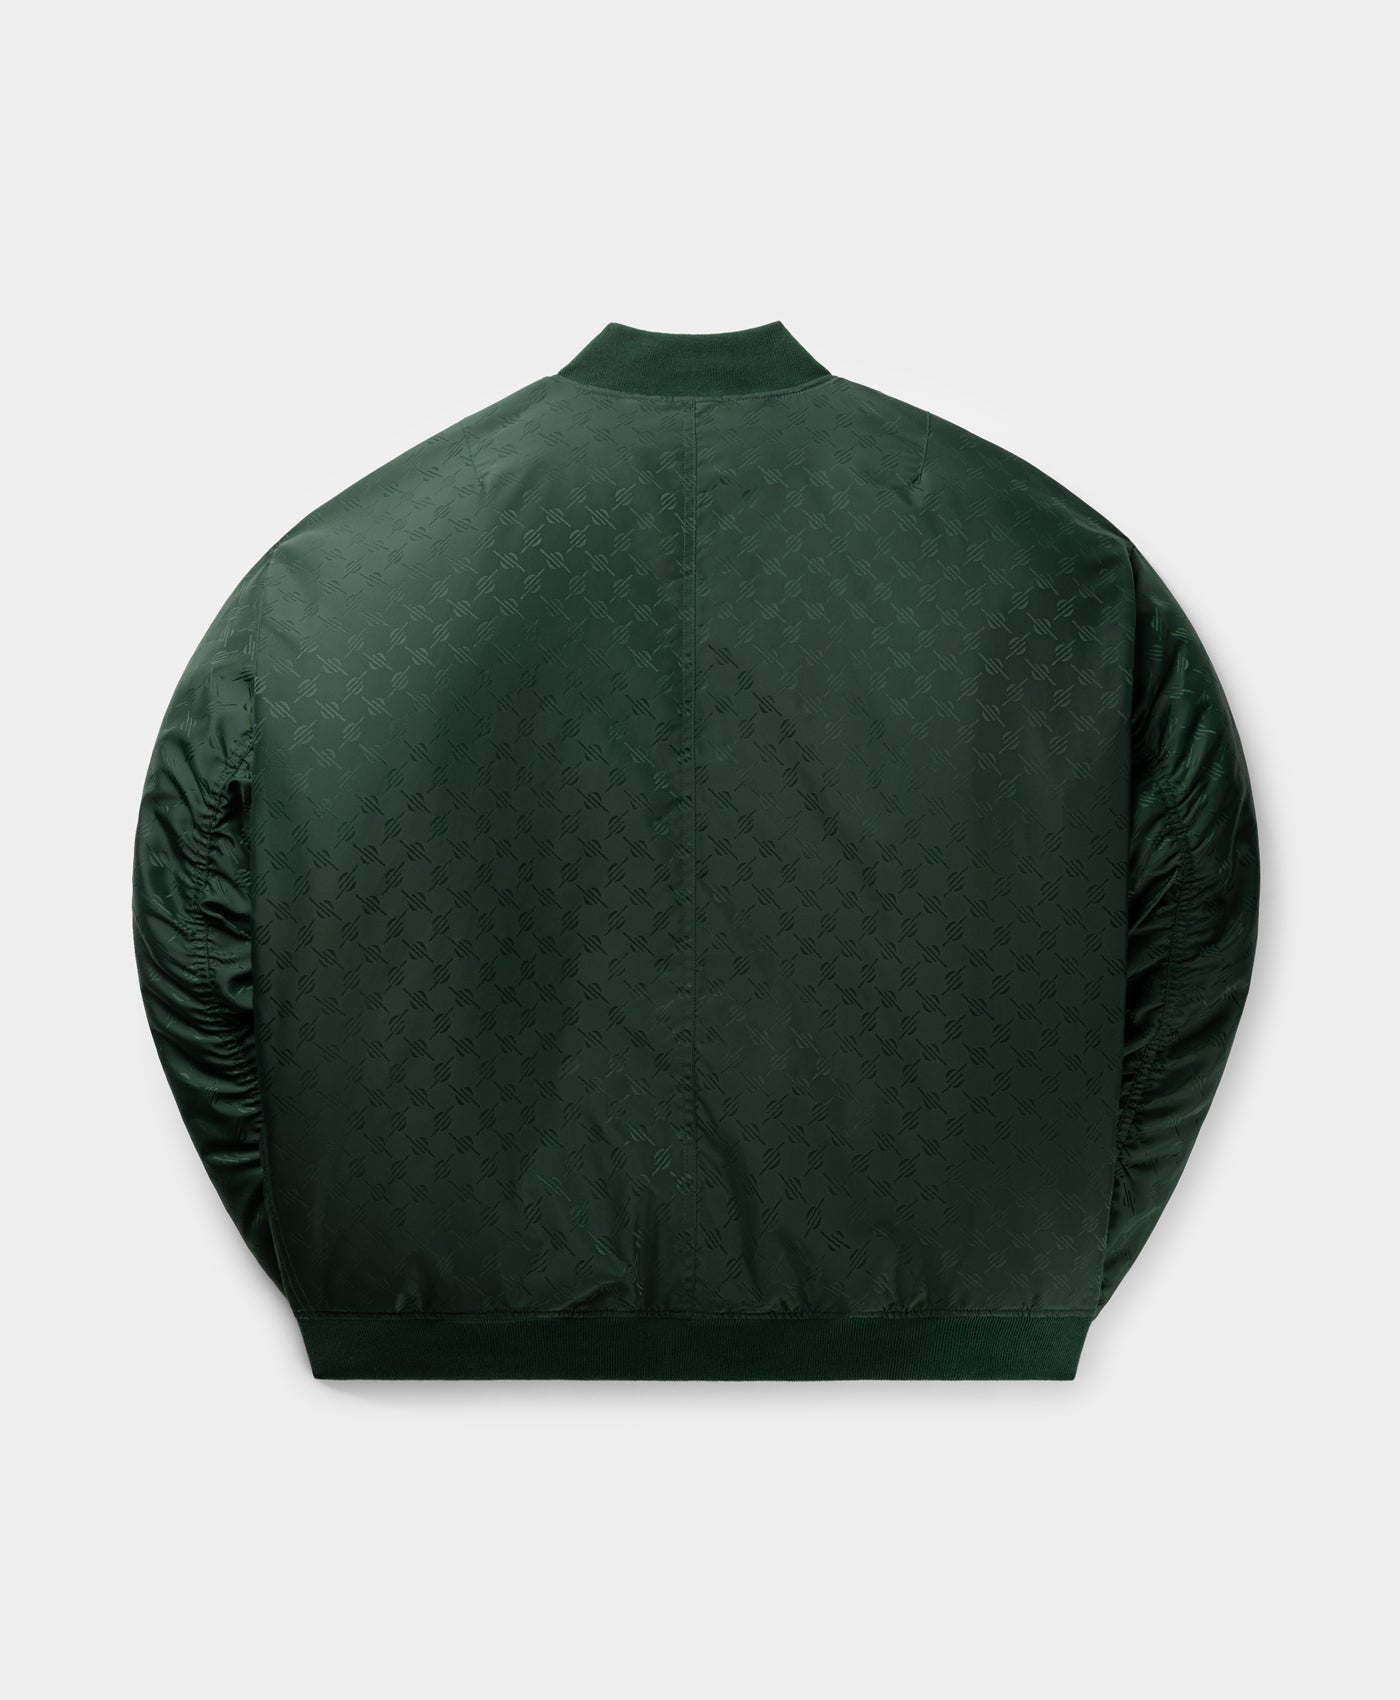 DP - Pine Green Ronack Jacket - Packshot - Rear